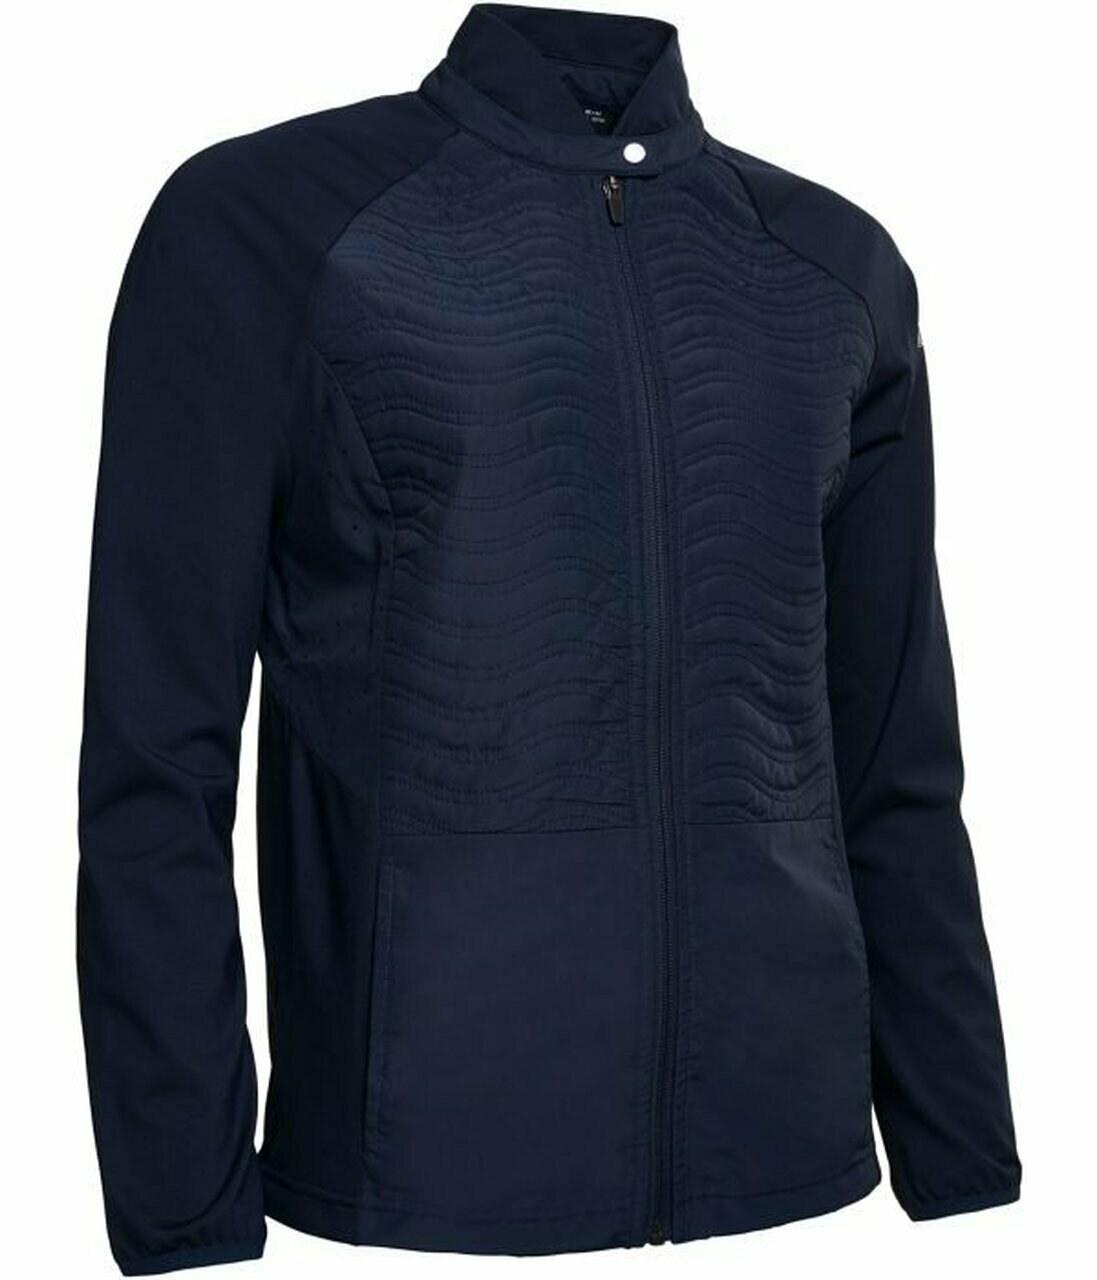 Abacus Sports Wear: Women’s High-Performance Golf Hybrid Jacket – Troon (Navy, Size: XL) SALE